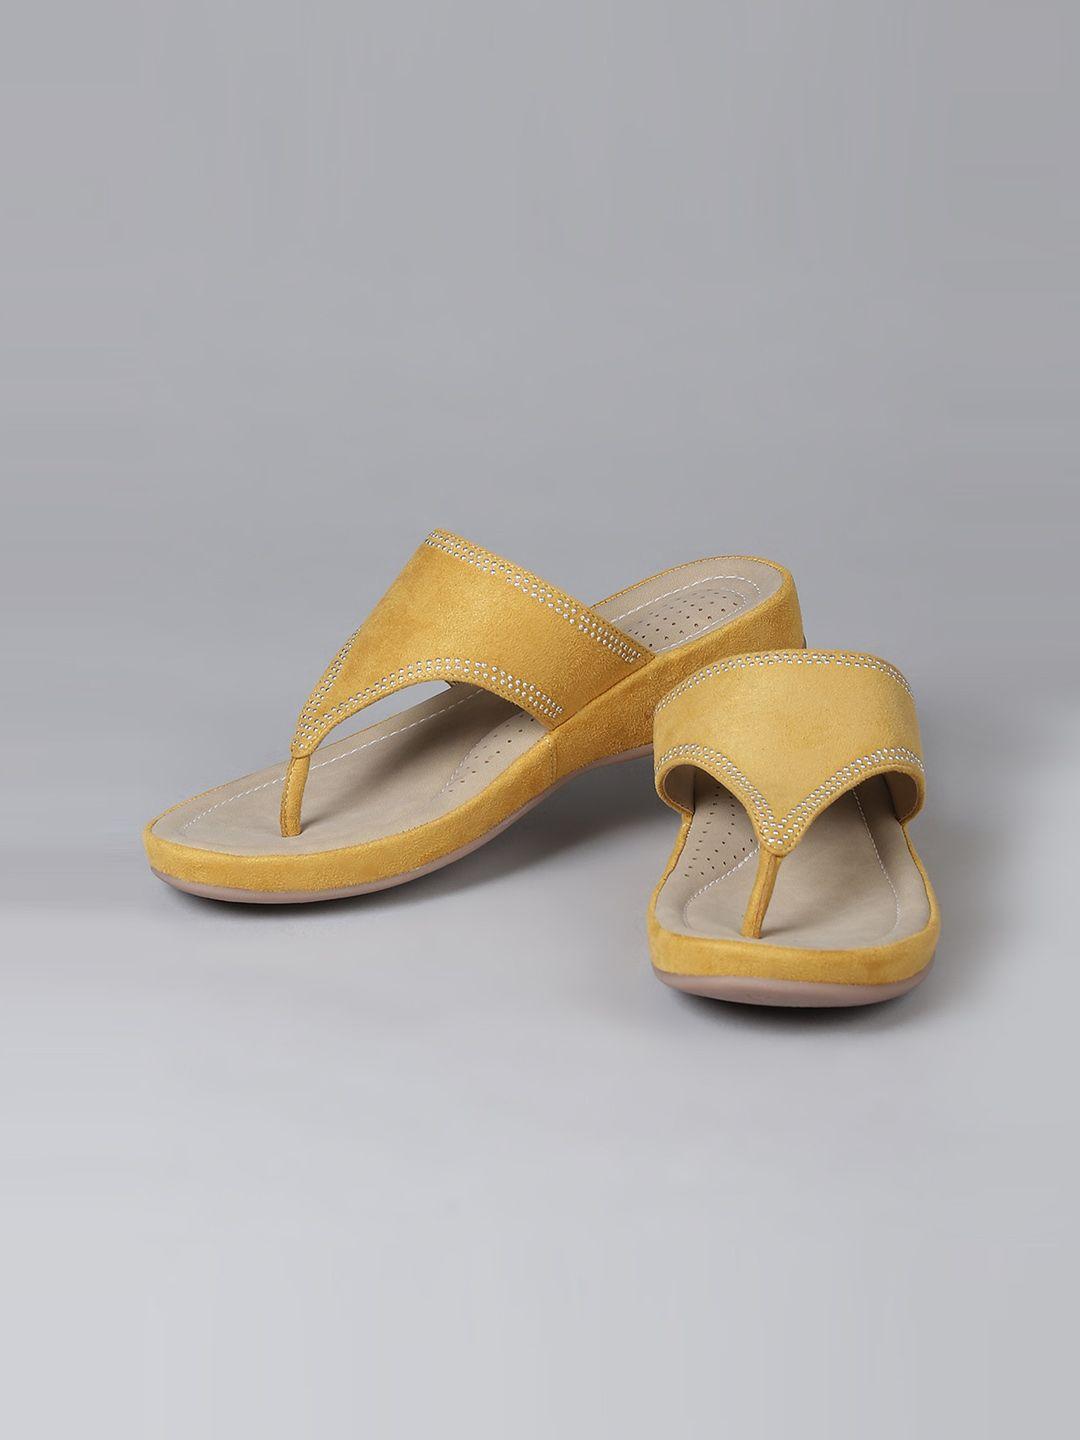 biba women mustard open toe flats with bows